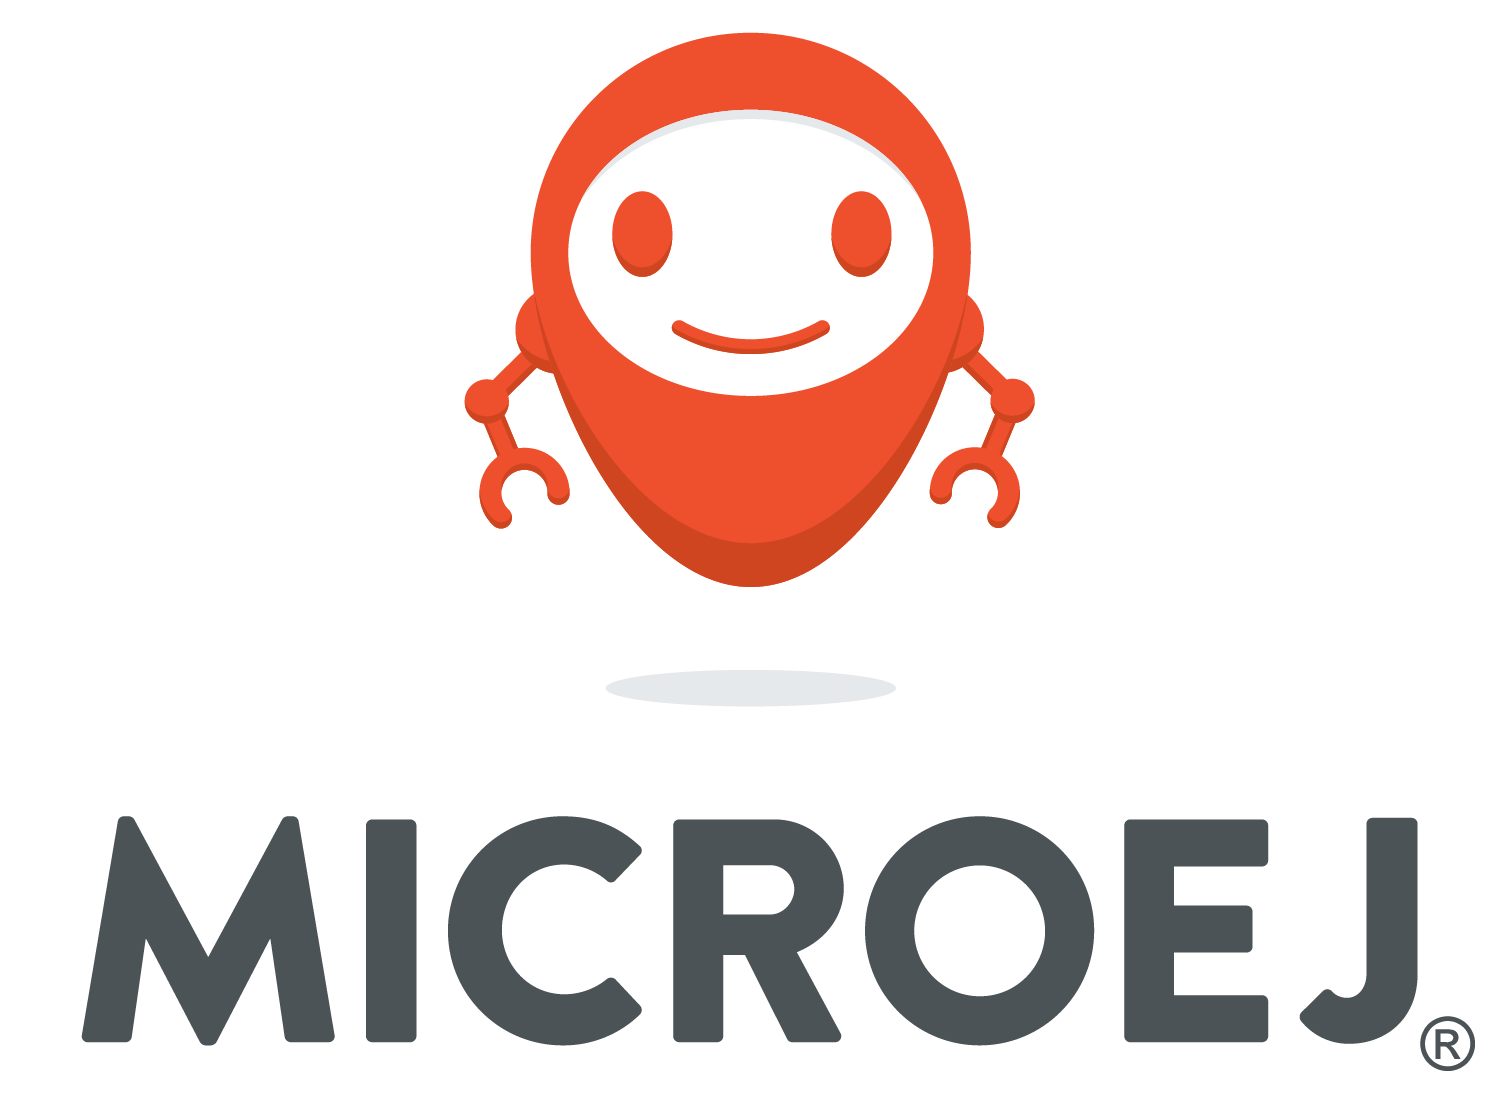 logo_microej_vertical _1500px.png